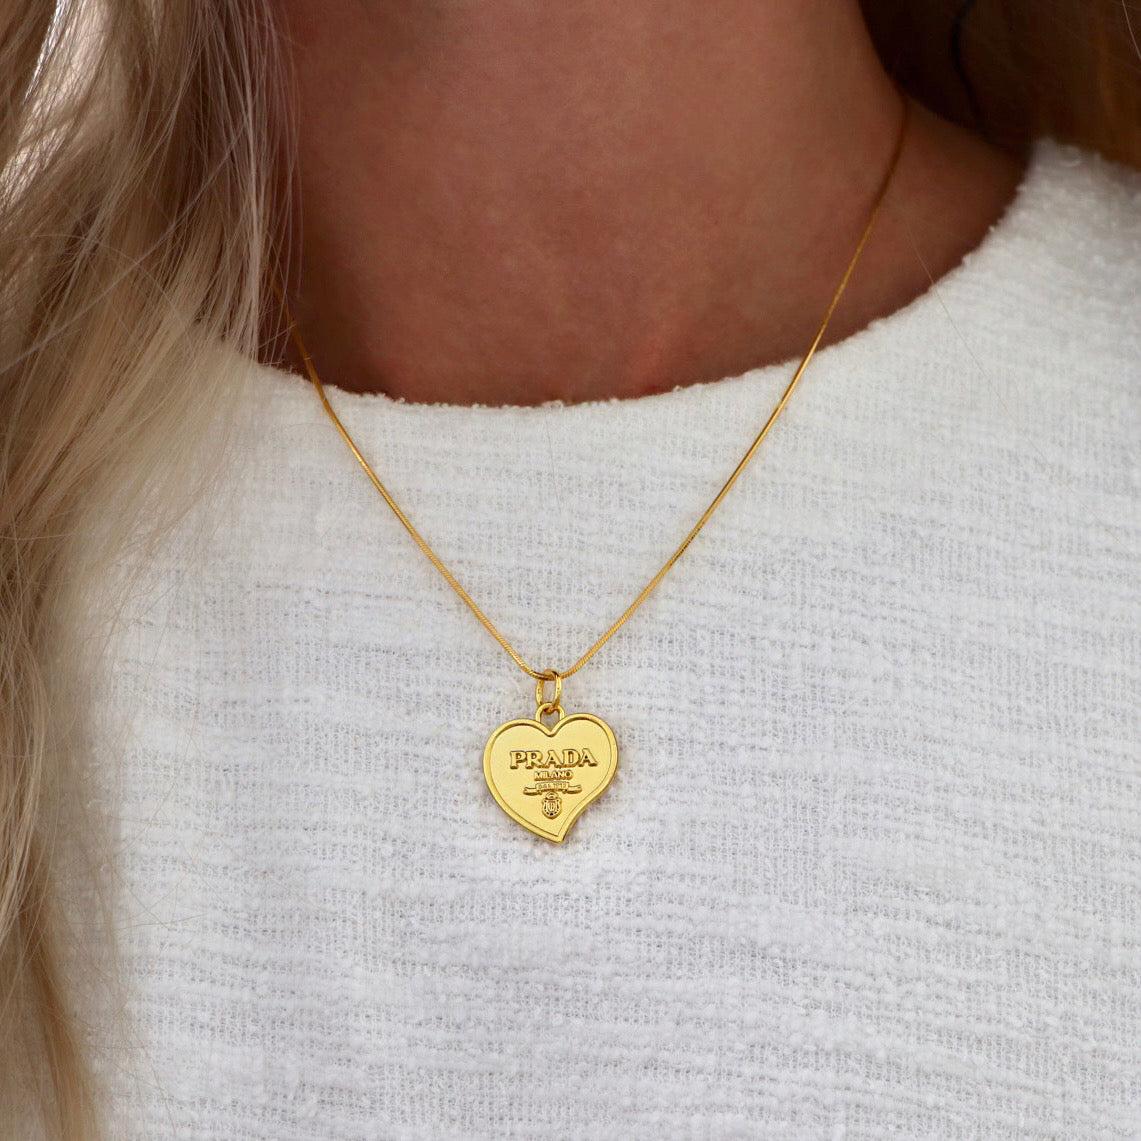 Prada Gold Heart Necklace